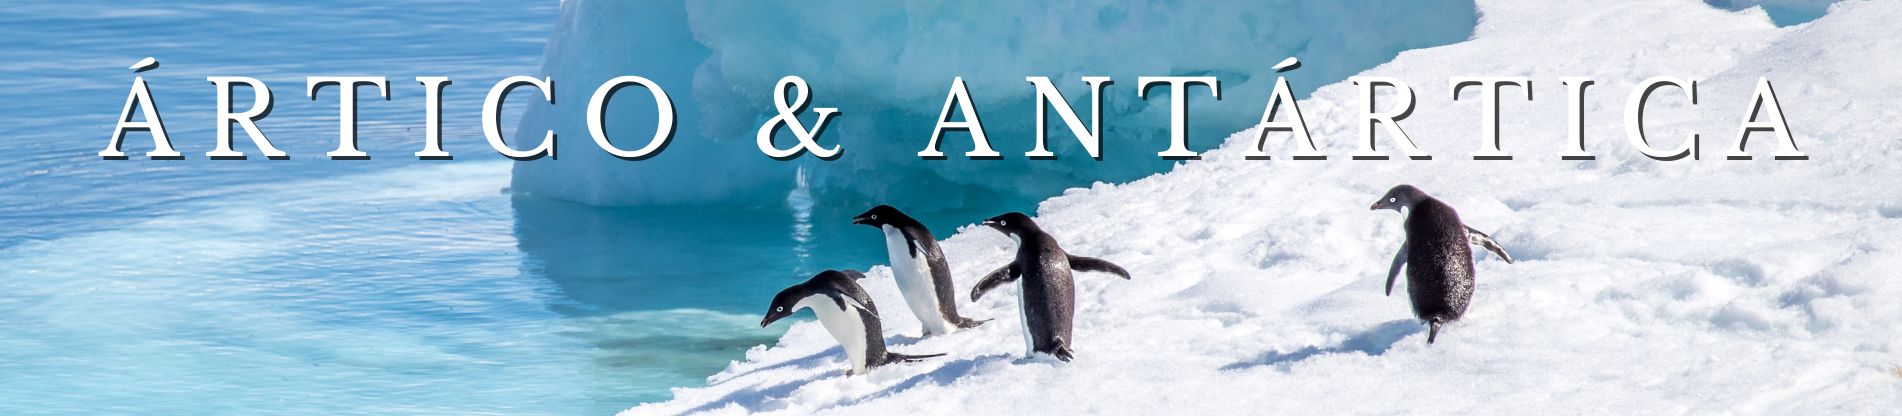 Banner Pacotes para Ártico e Antártica